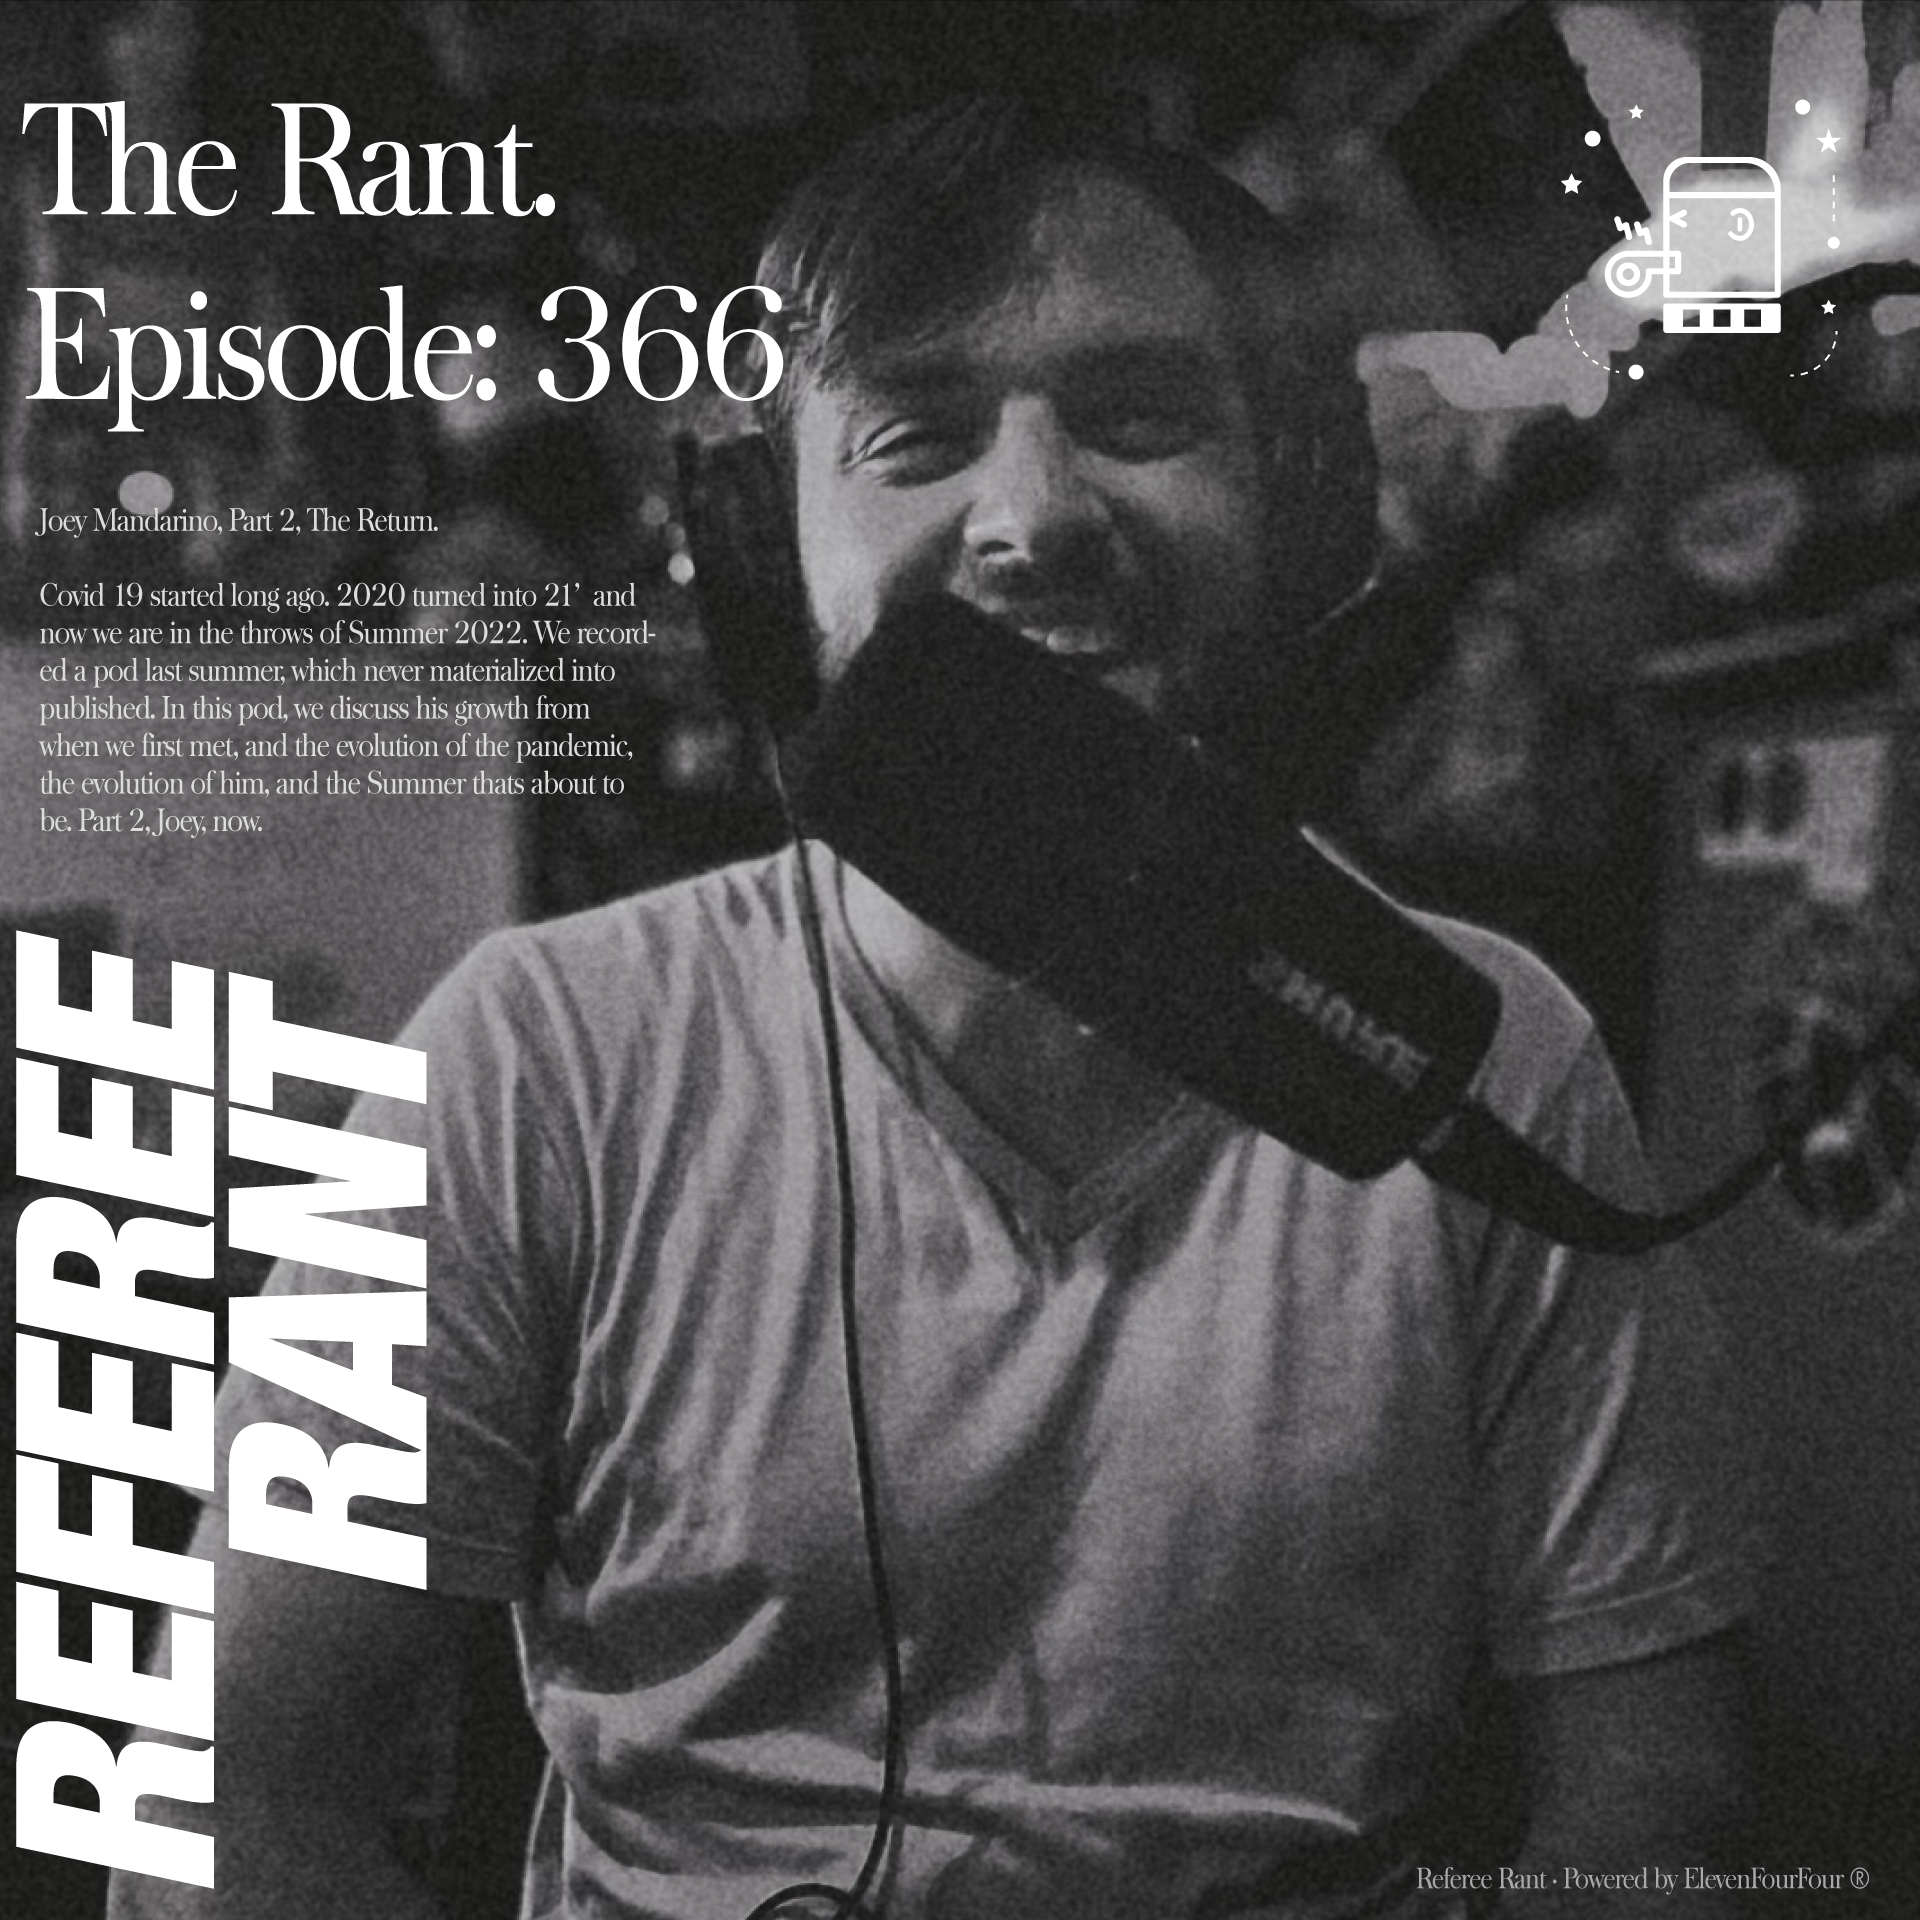 Episode 366, The Rant: Joey Mandarino, Part 2, The Return.